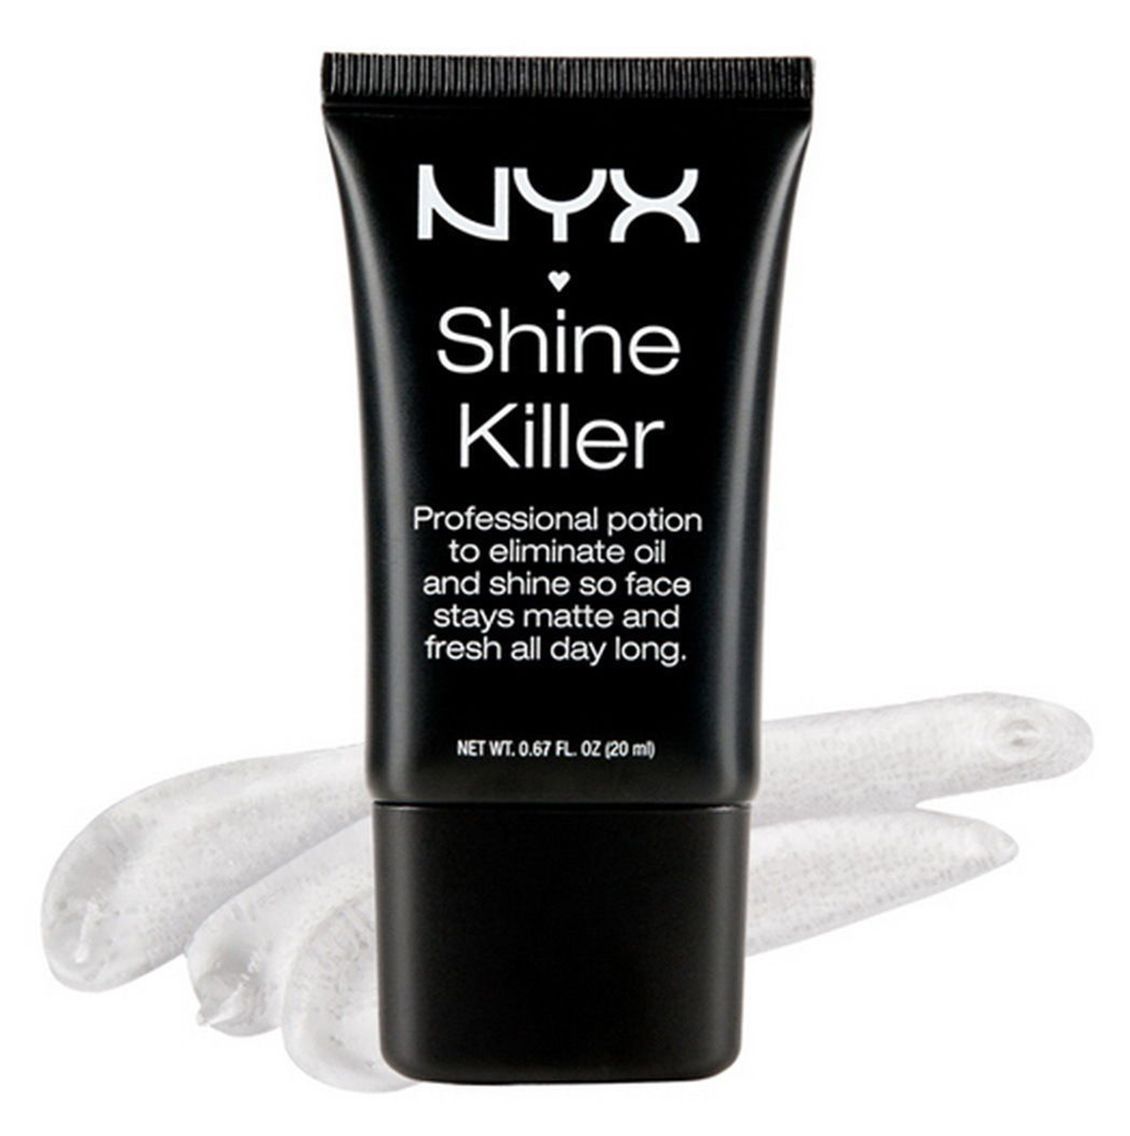 Матирующий праймер отзывы. NYX праймер матирующий. Праймер NYX professional Makeup. Праймер от НИКС Шайн киллер. Праймер Shine Killer матирующий.